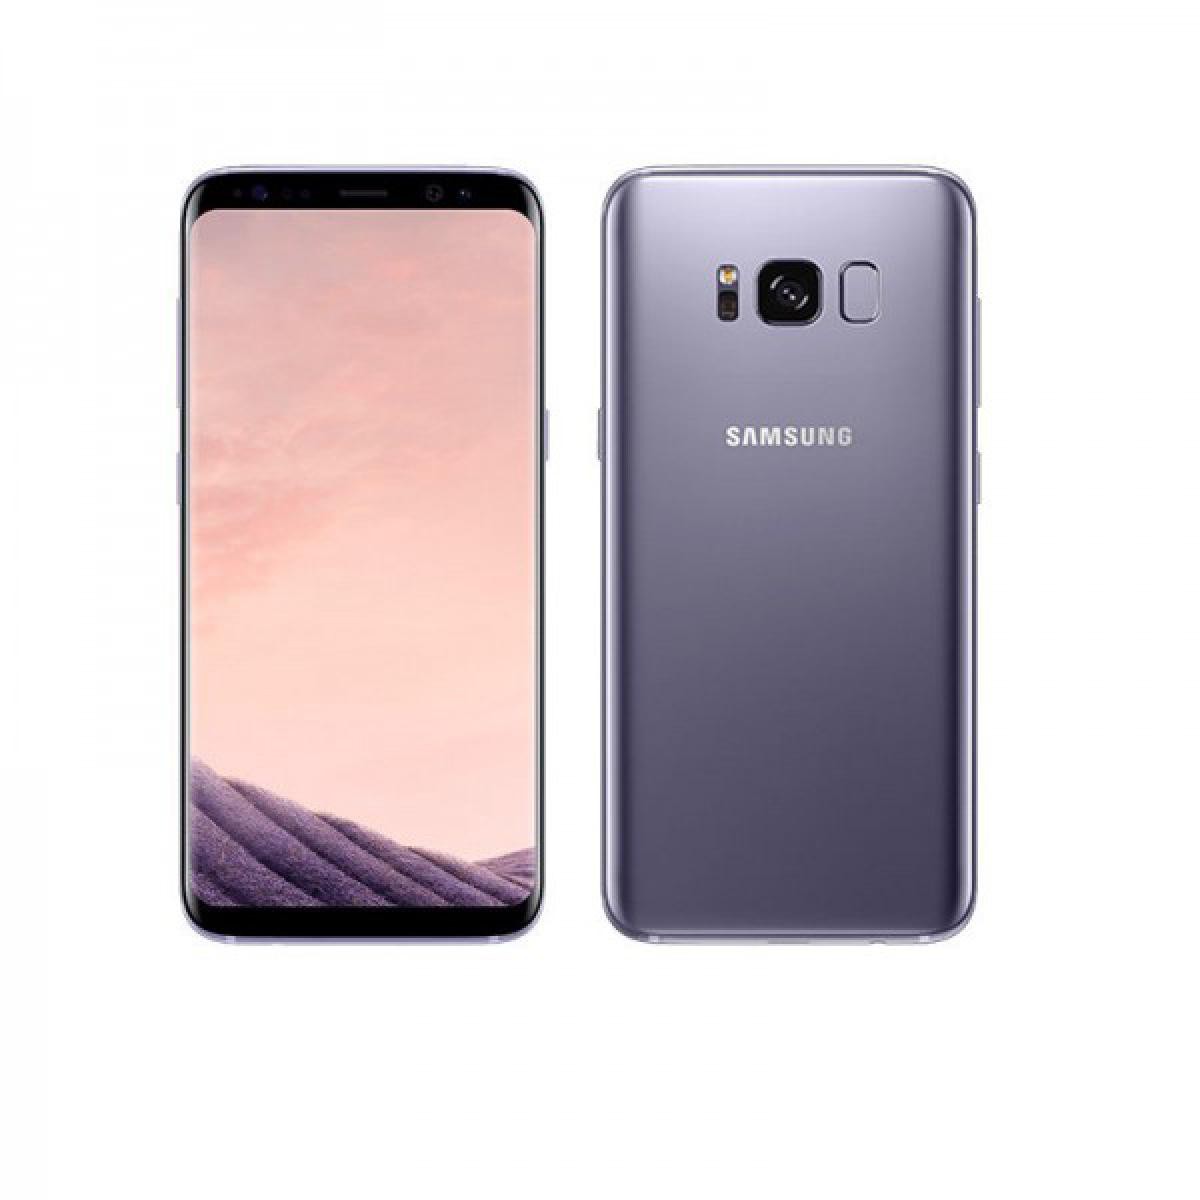 Samsung - Samsung Galaxy S8 Violeta Móvil 4g 5.8'' Samoled Qhd+/8core/64gb/4gb Ram/12mp/8mp - Bracelet connecté